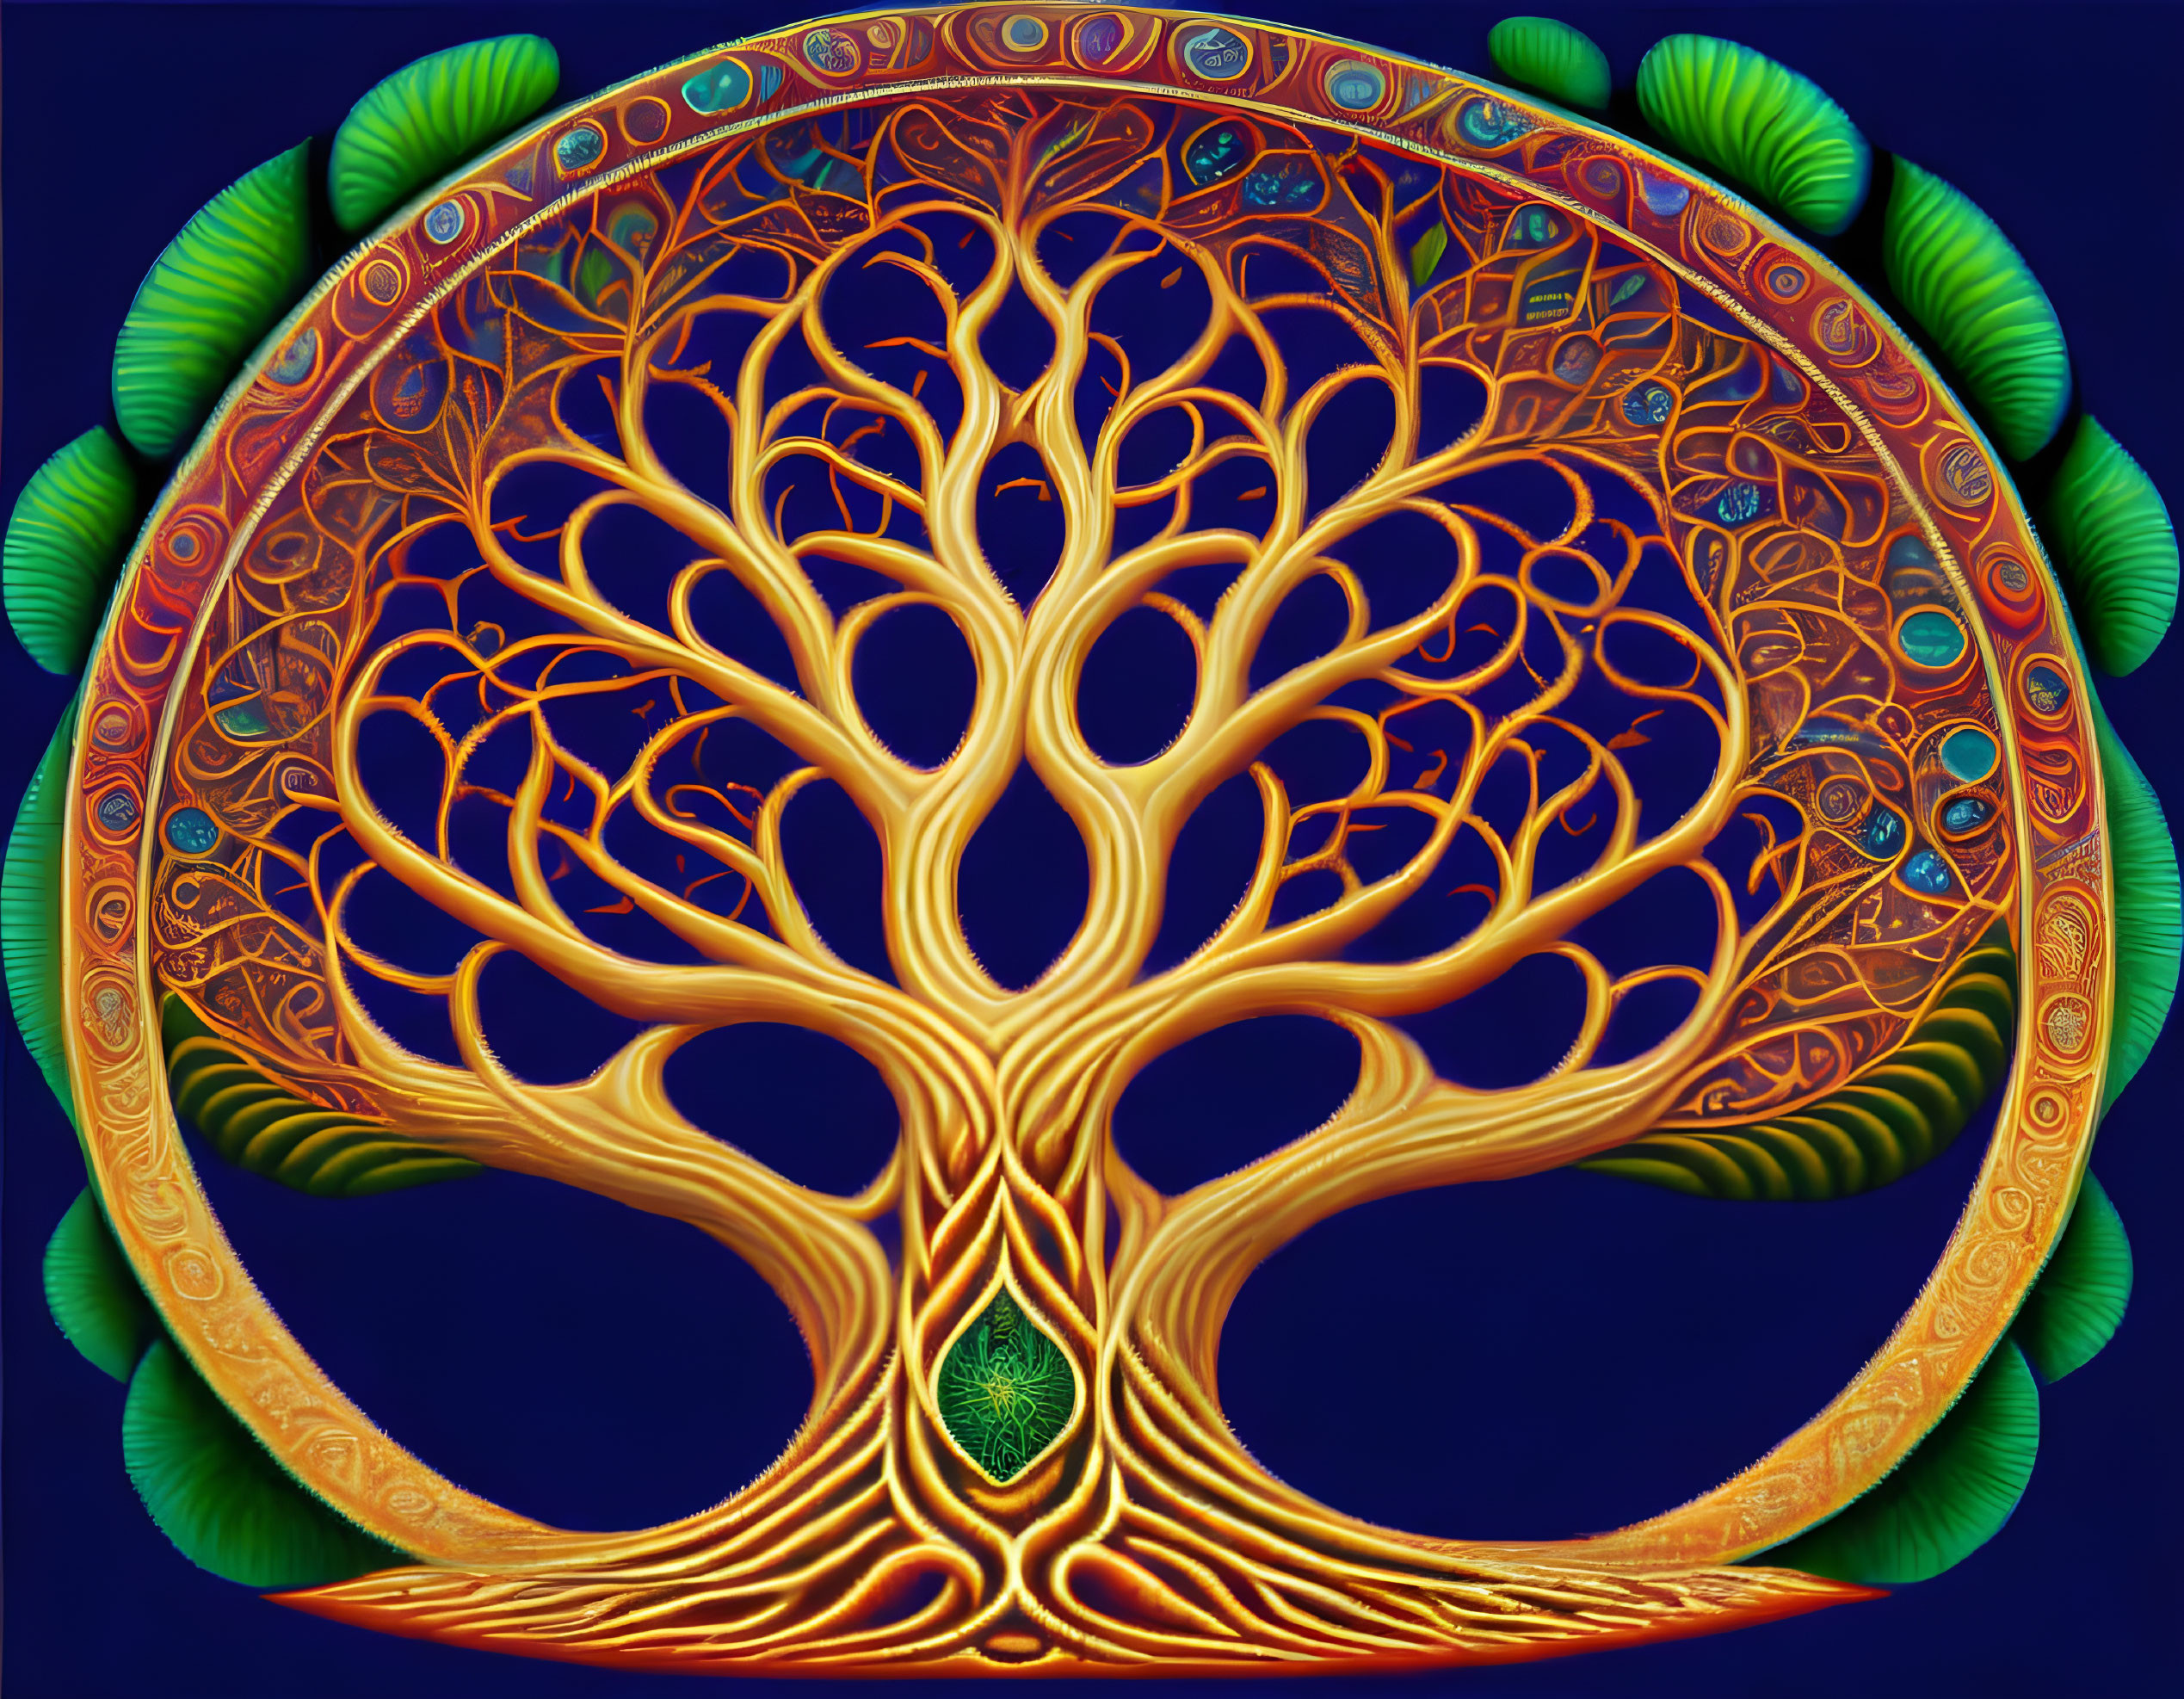 Symmetrical fractal tree with leafy border on dark blue background